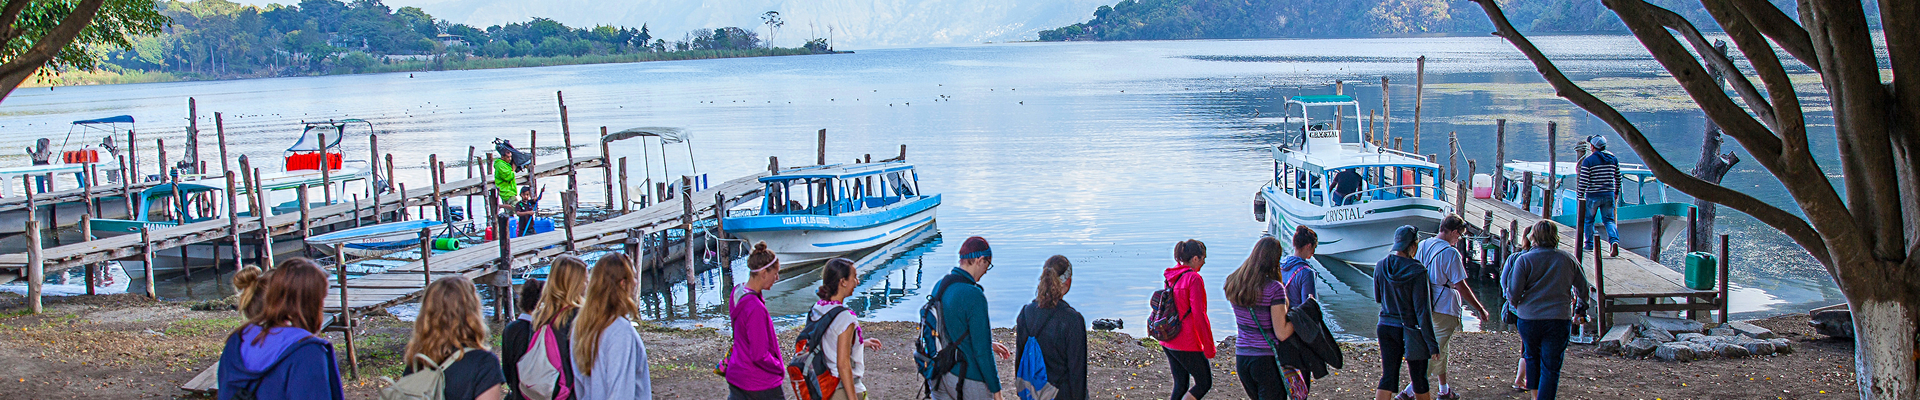 Students boarding boat in Guatemalan village